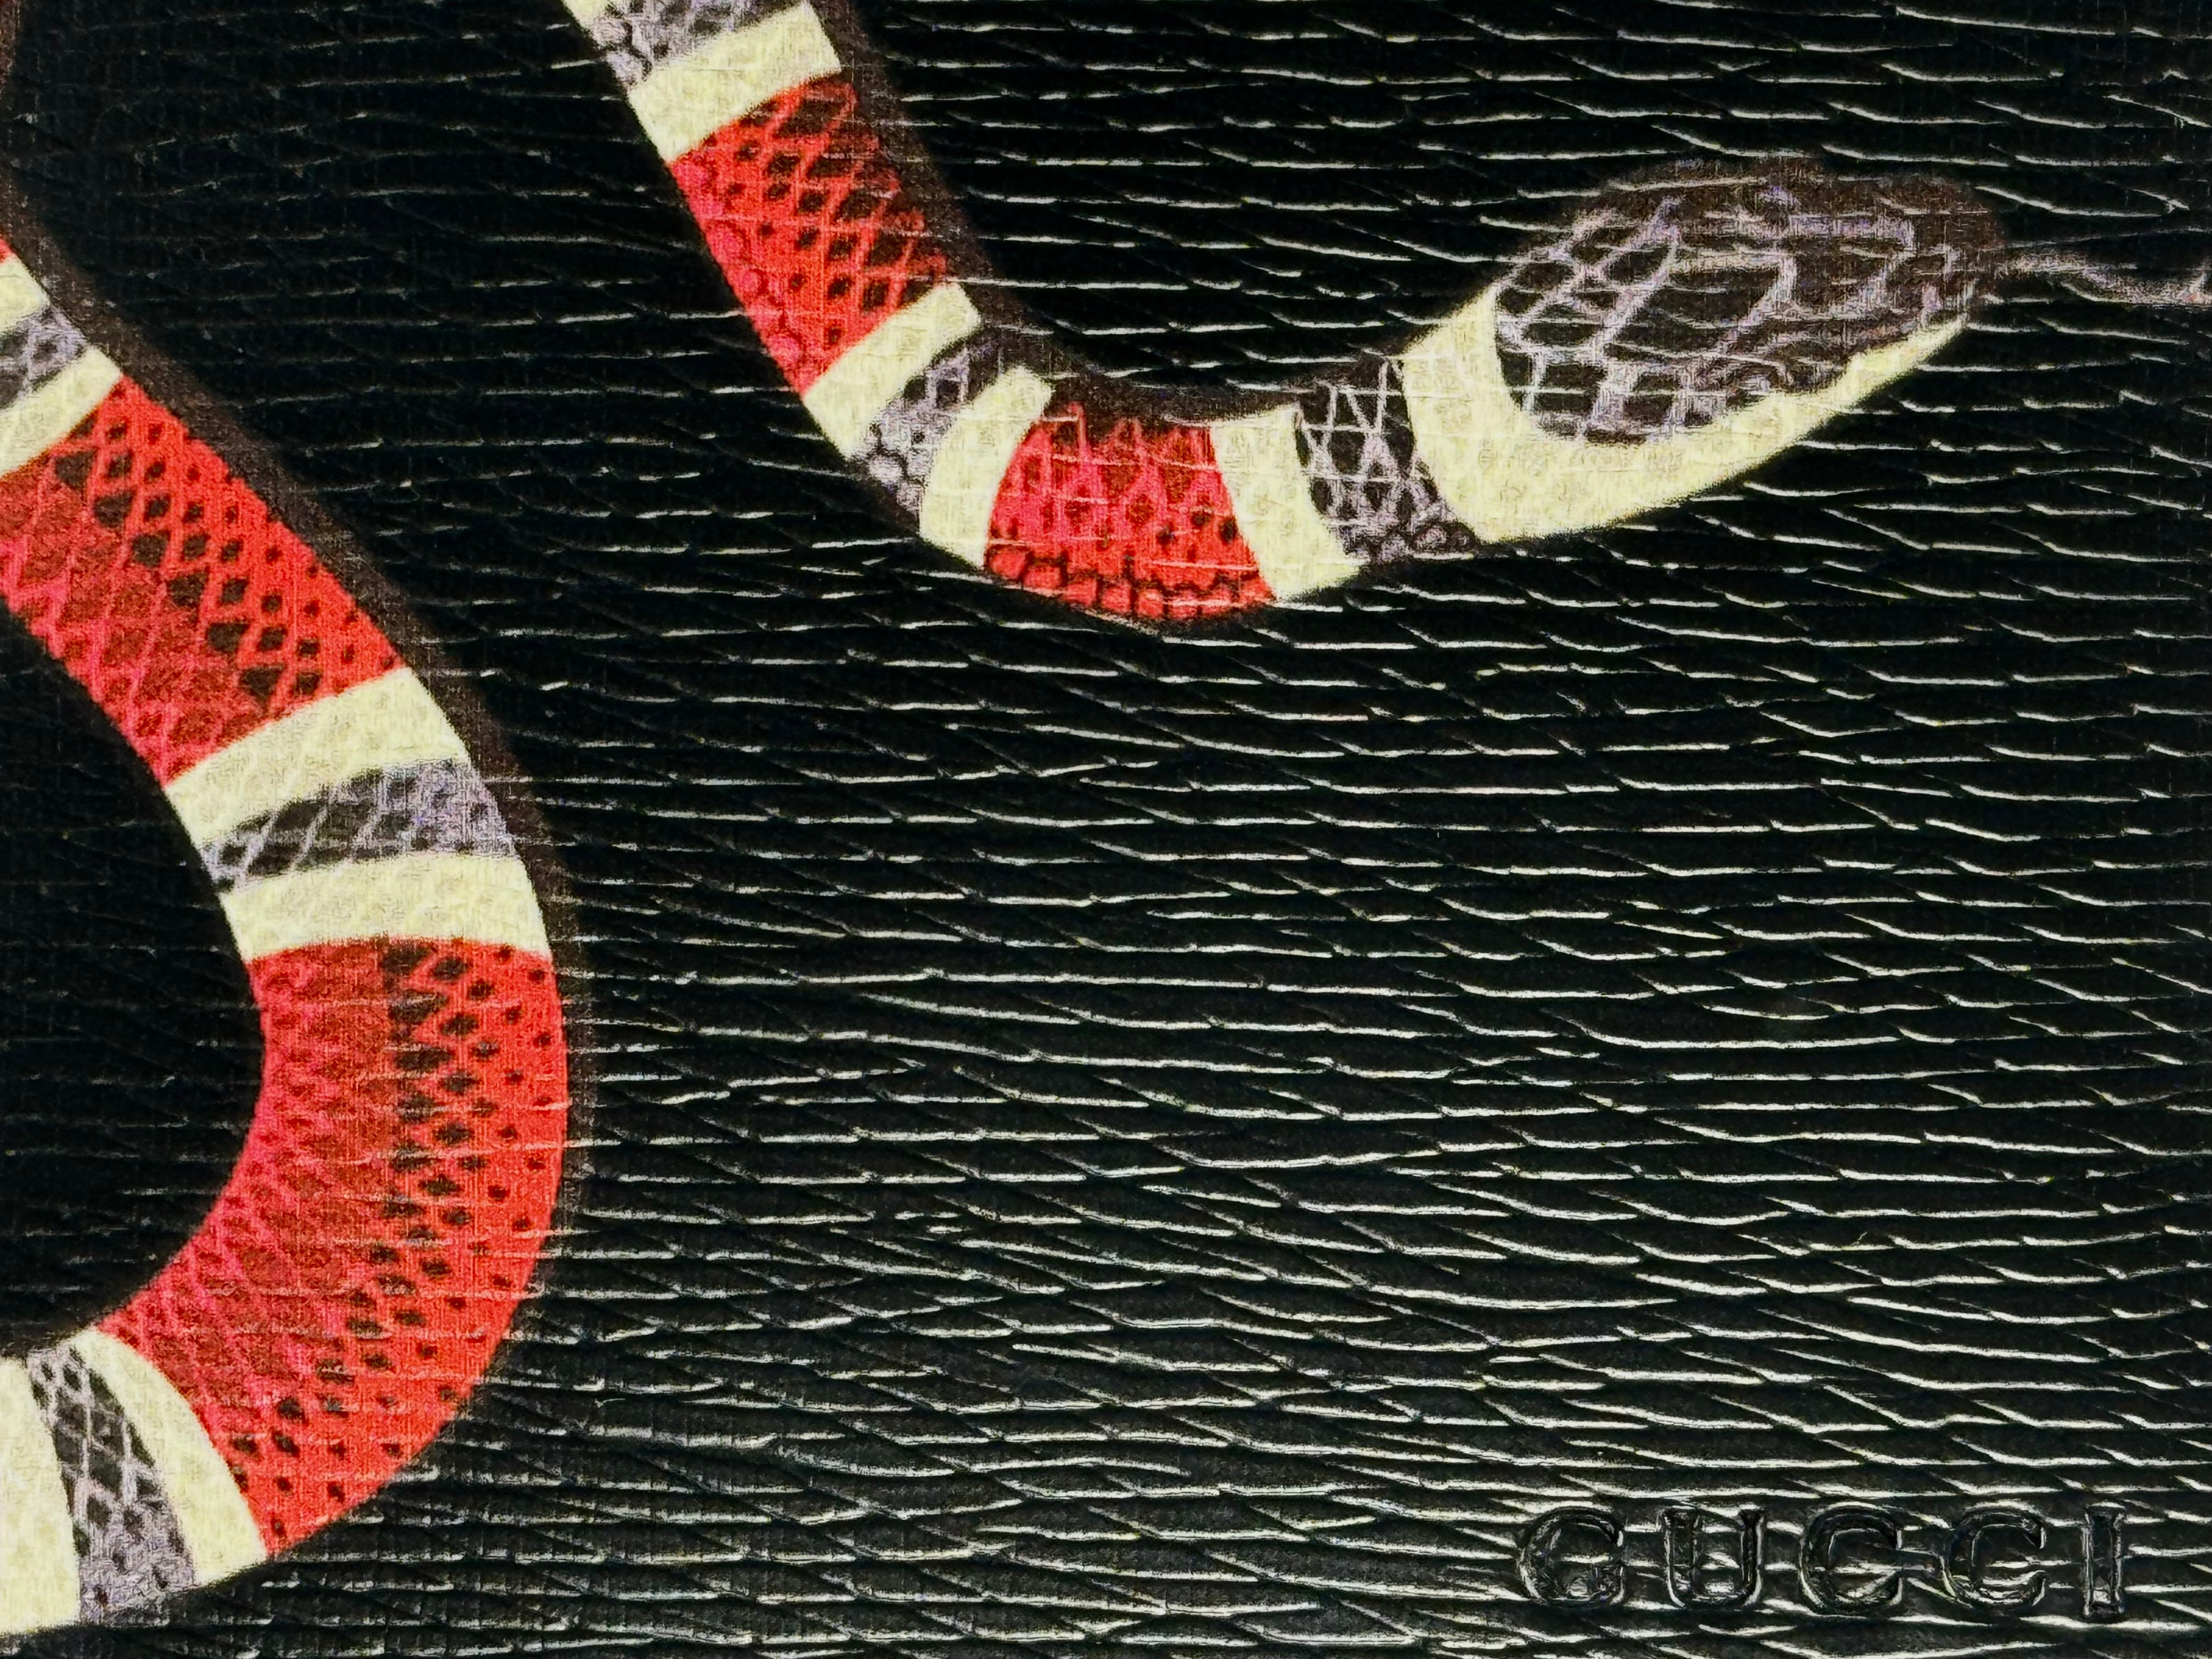 Gucci wallet snake pattern leather black